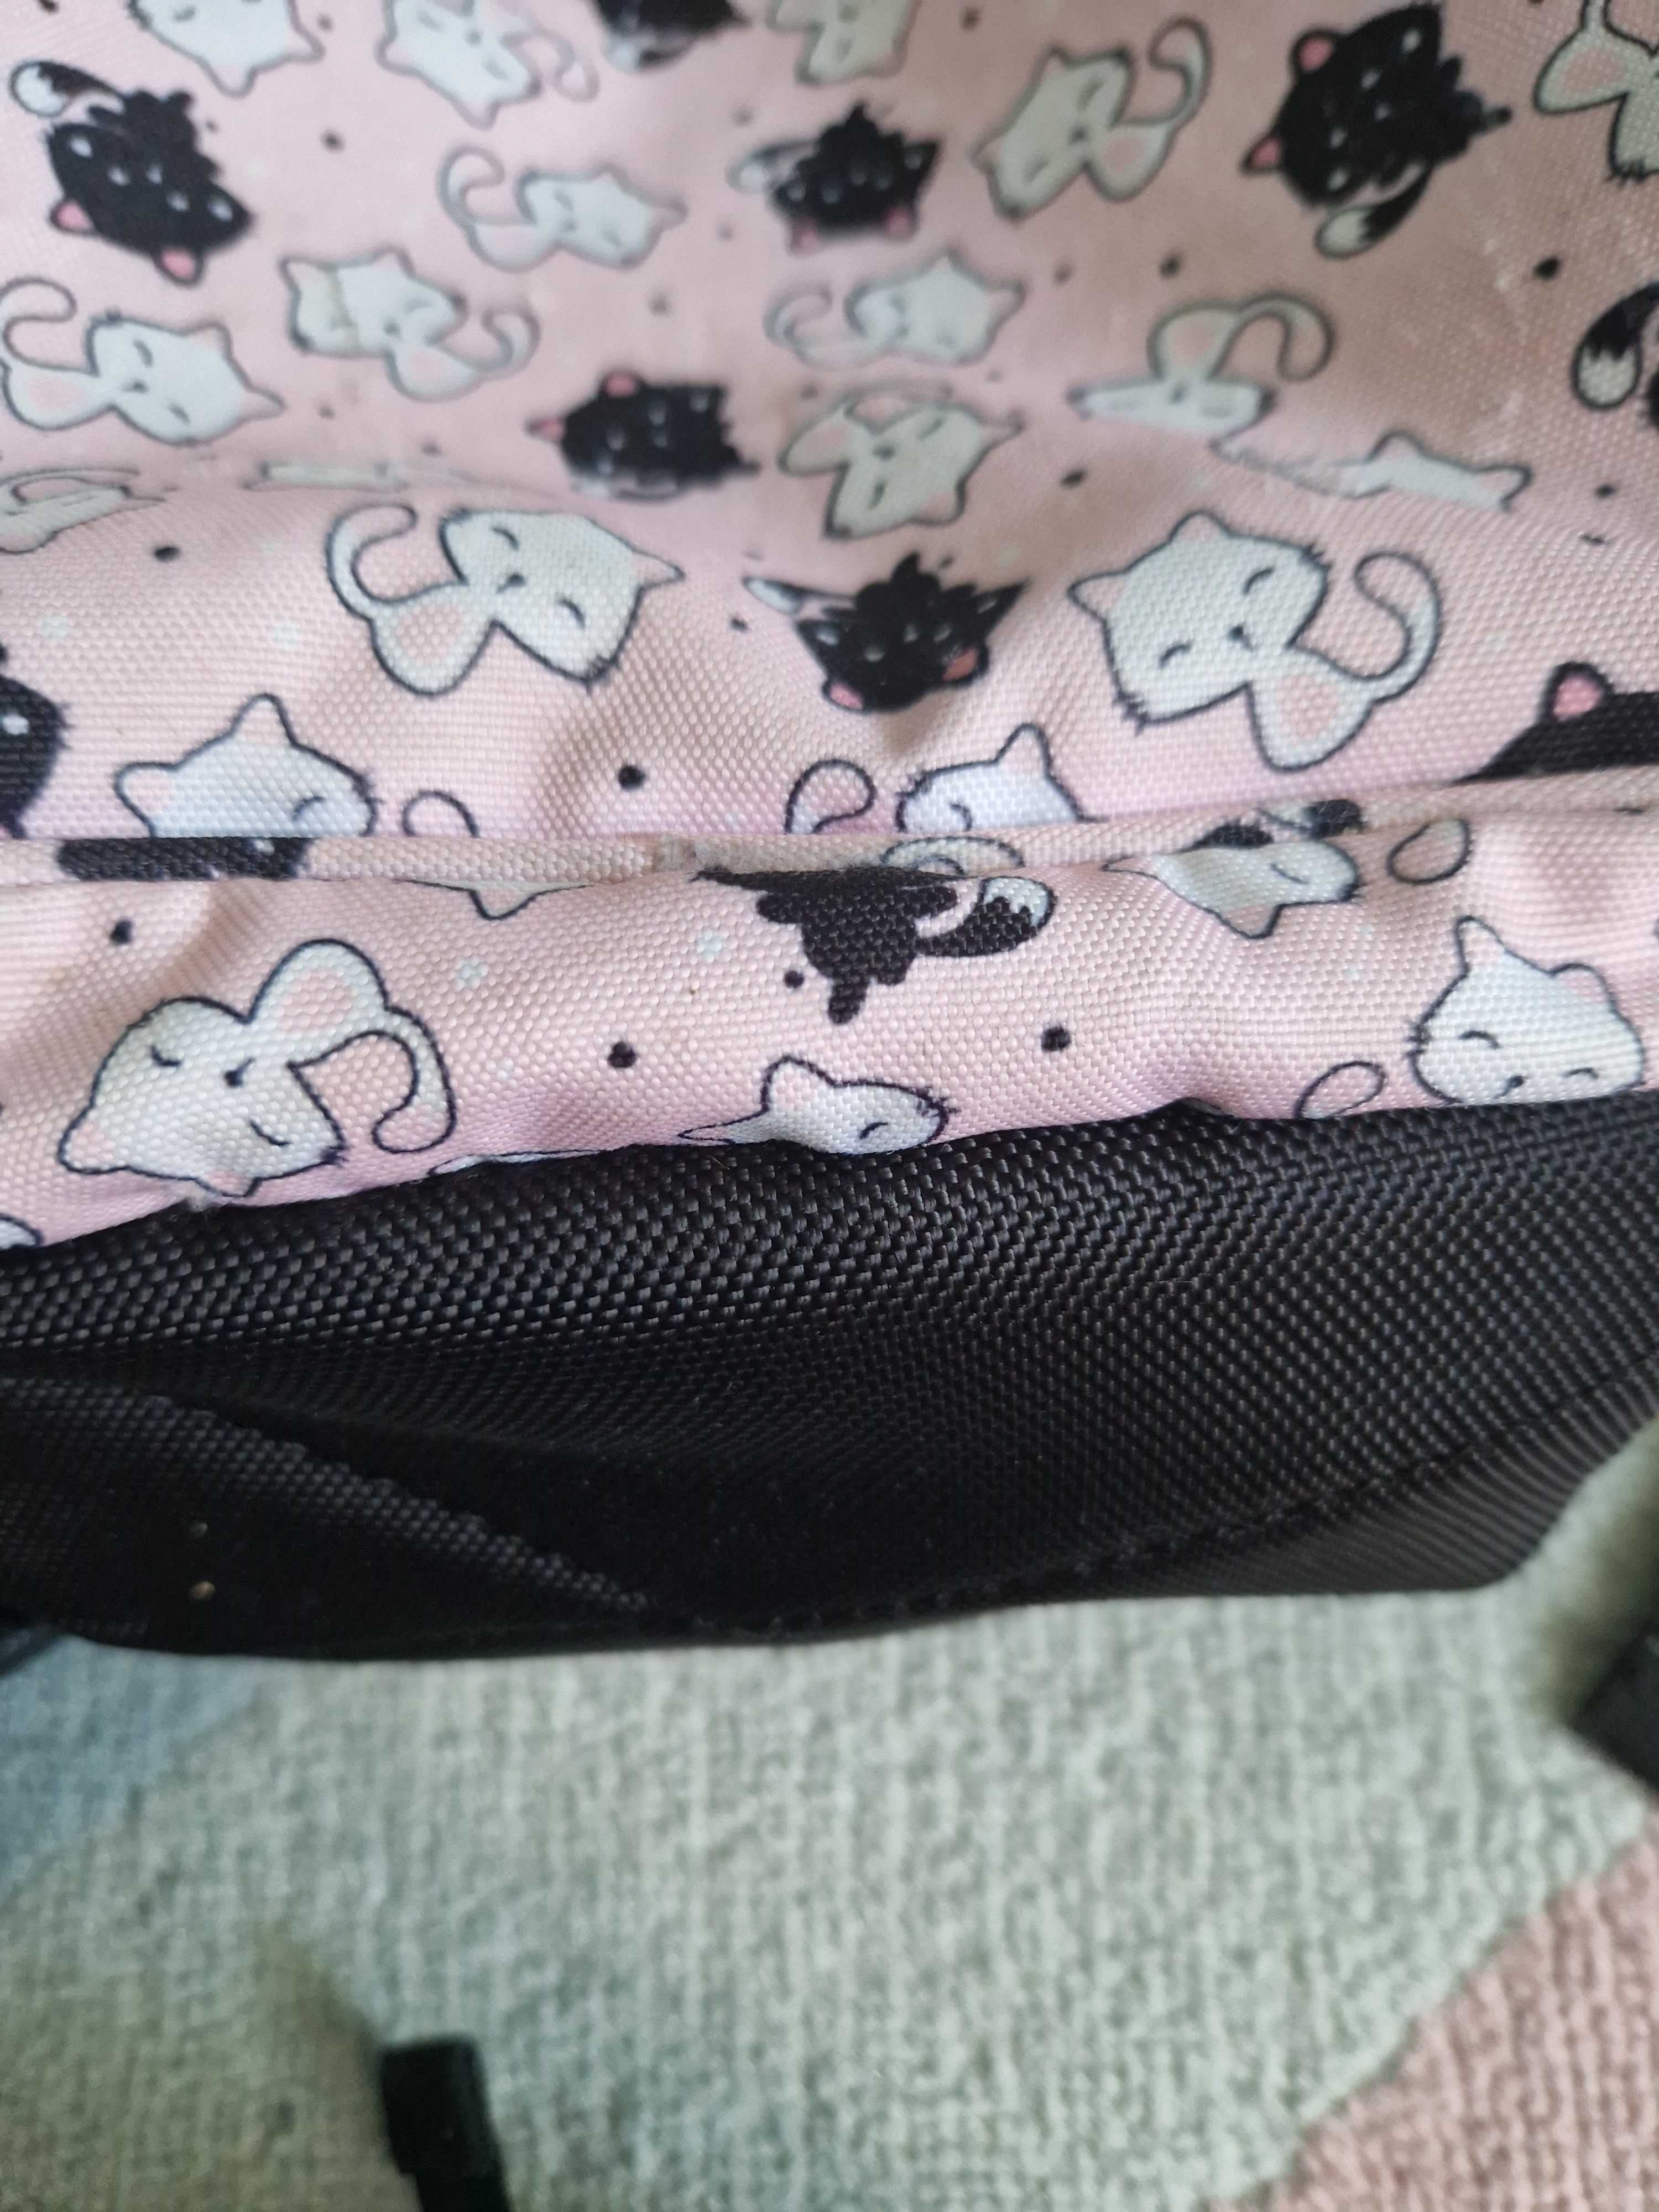 Plecak backup różowy kotki